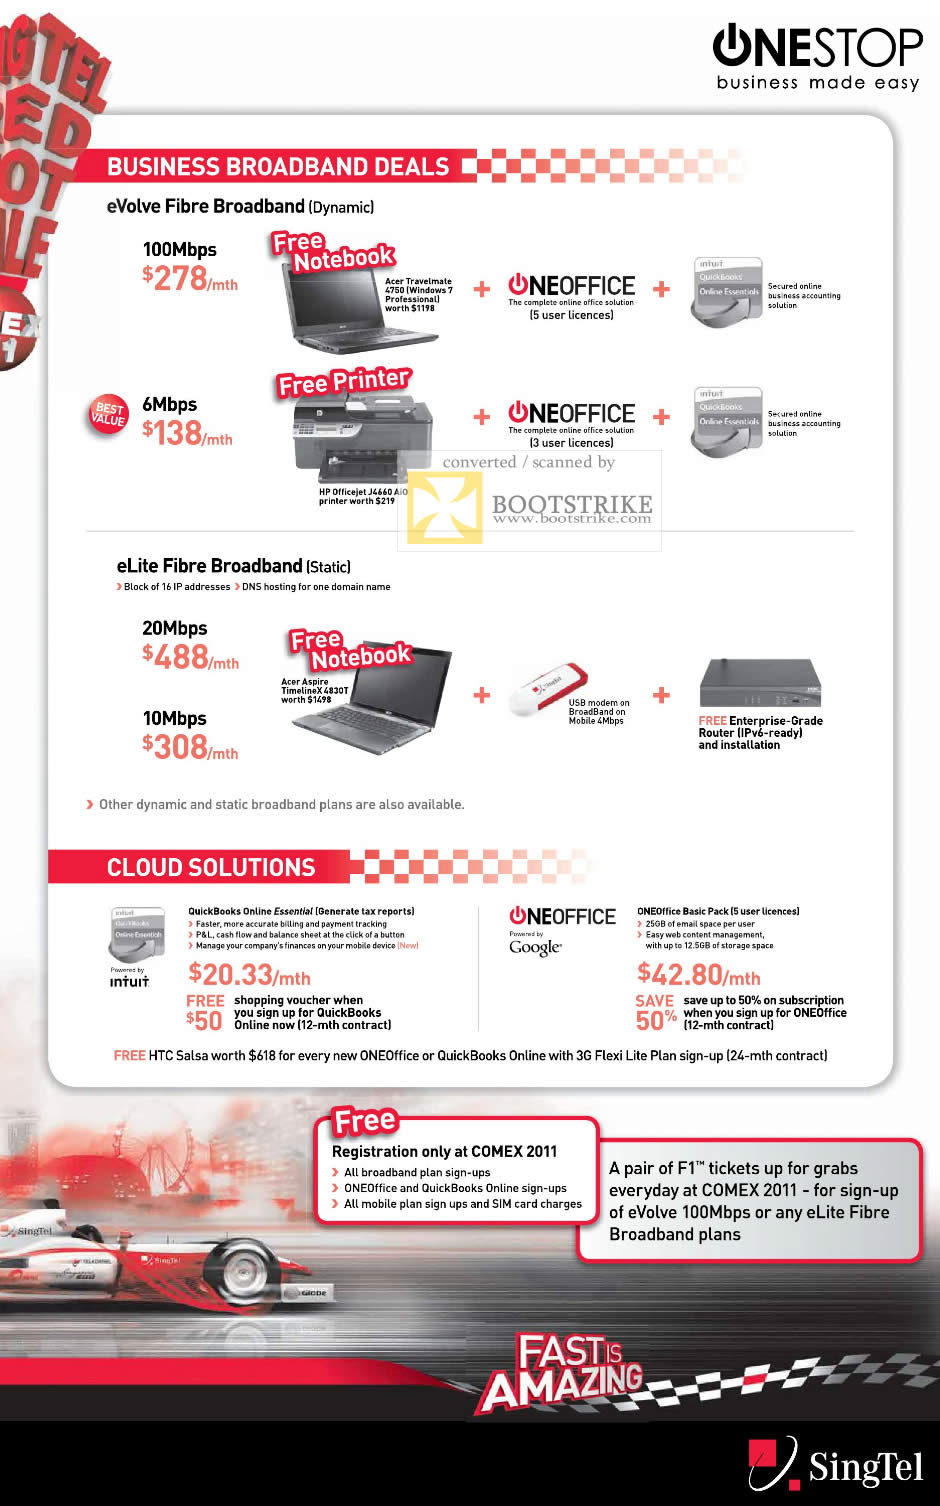 COMEX 2011 price list image brochure of Singtel Business Broadband EVolve Fibre Free Acer Travelmate 4750 Notebook HP Officejet J4660 Printer Oneoffice ELite Cloud Intuit QuickBooks